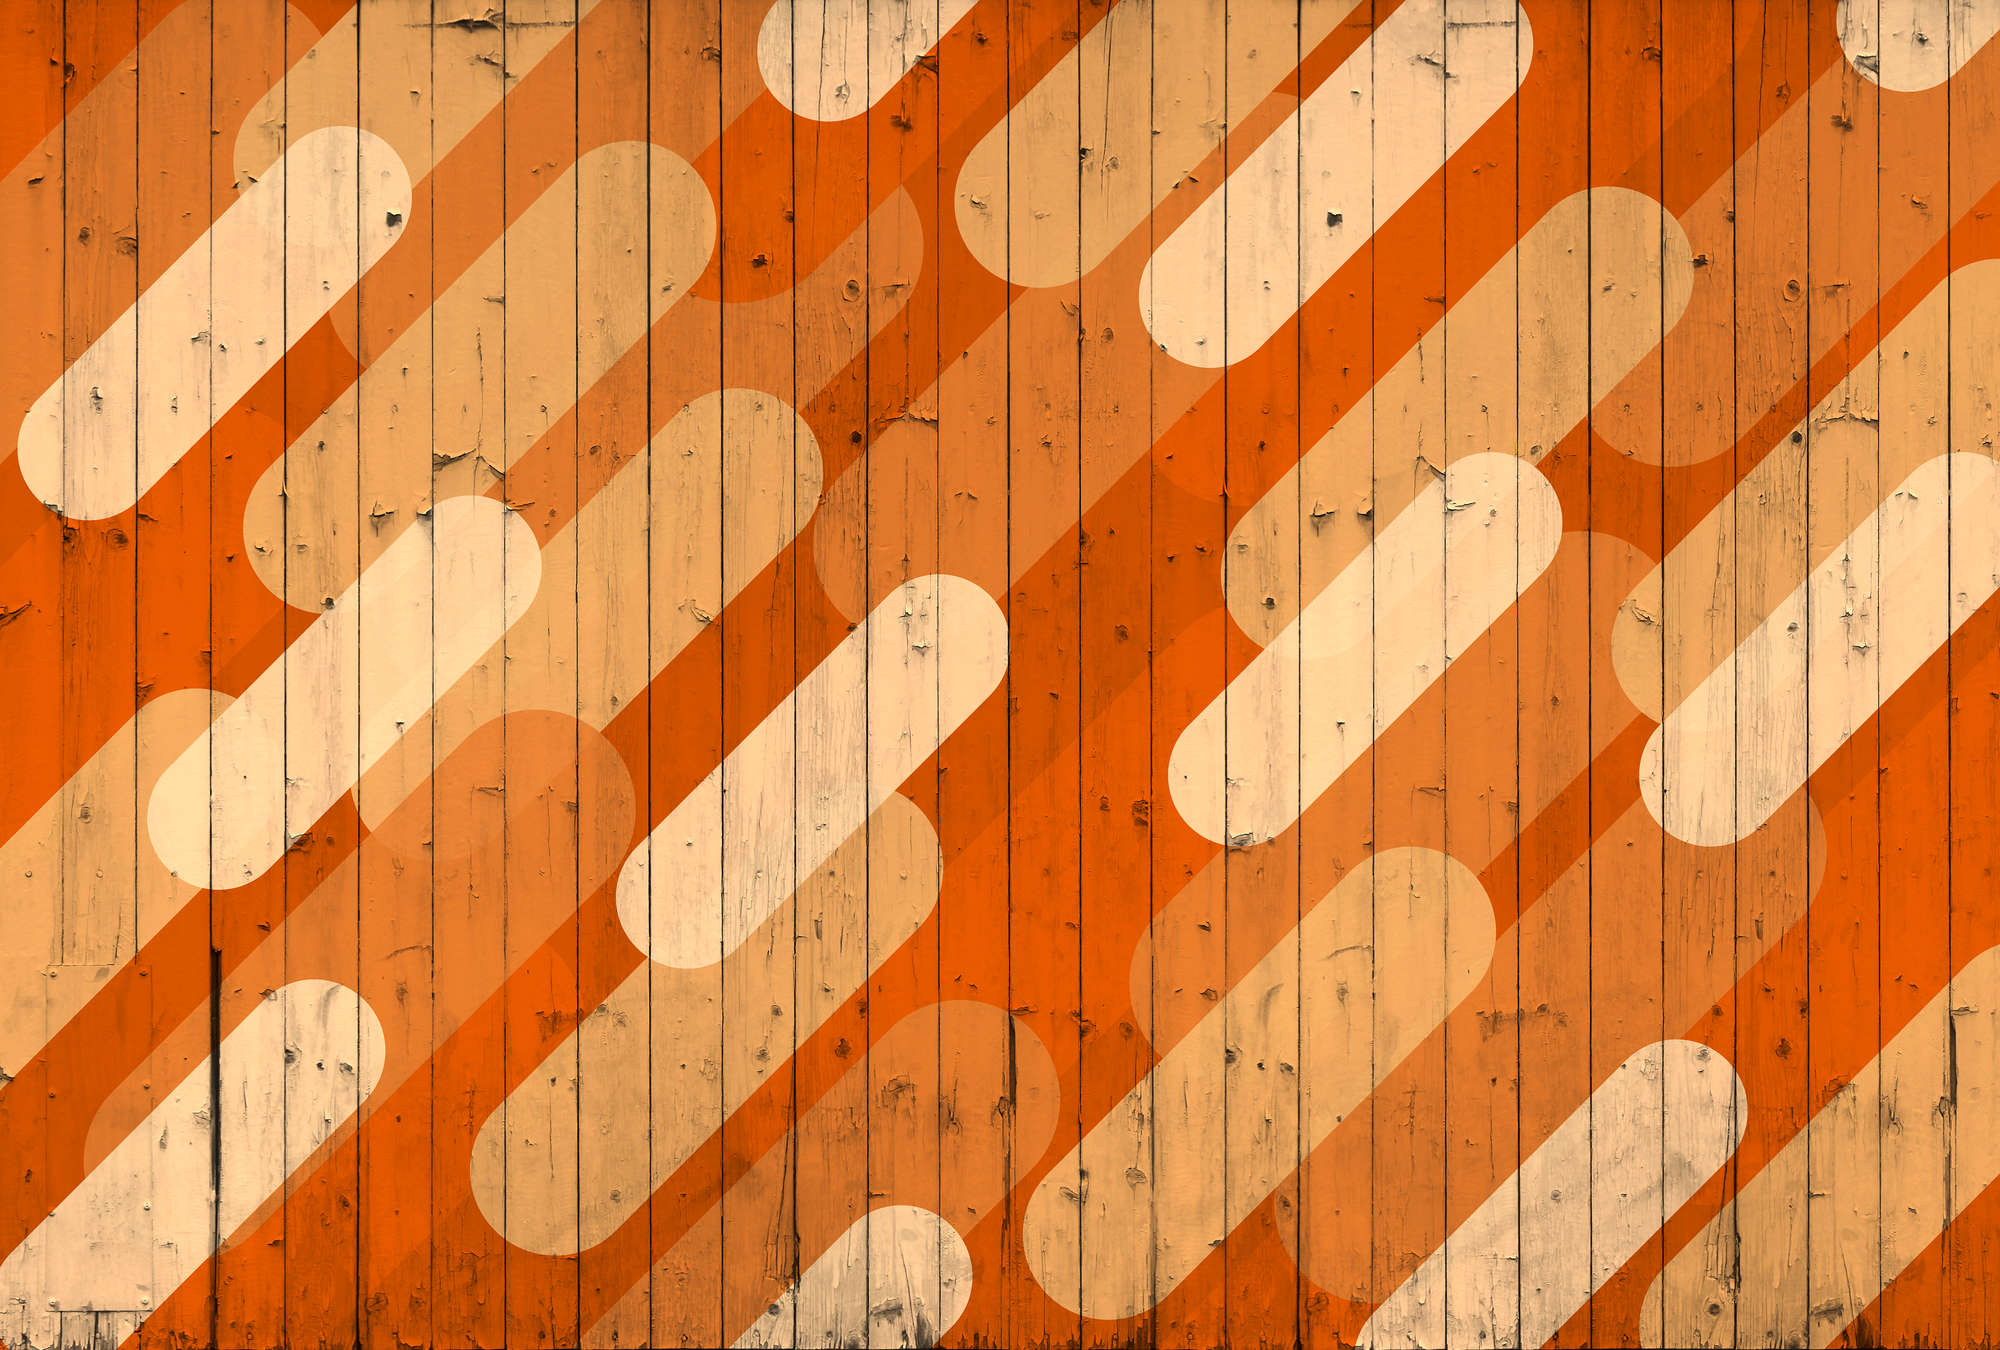             Photo wallpaper with board optics & diagonal stripe design - orange, beige, cream
        